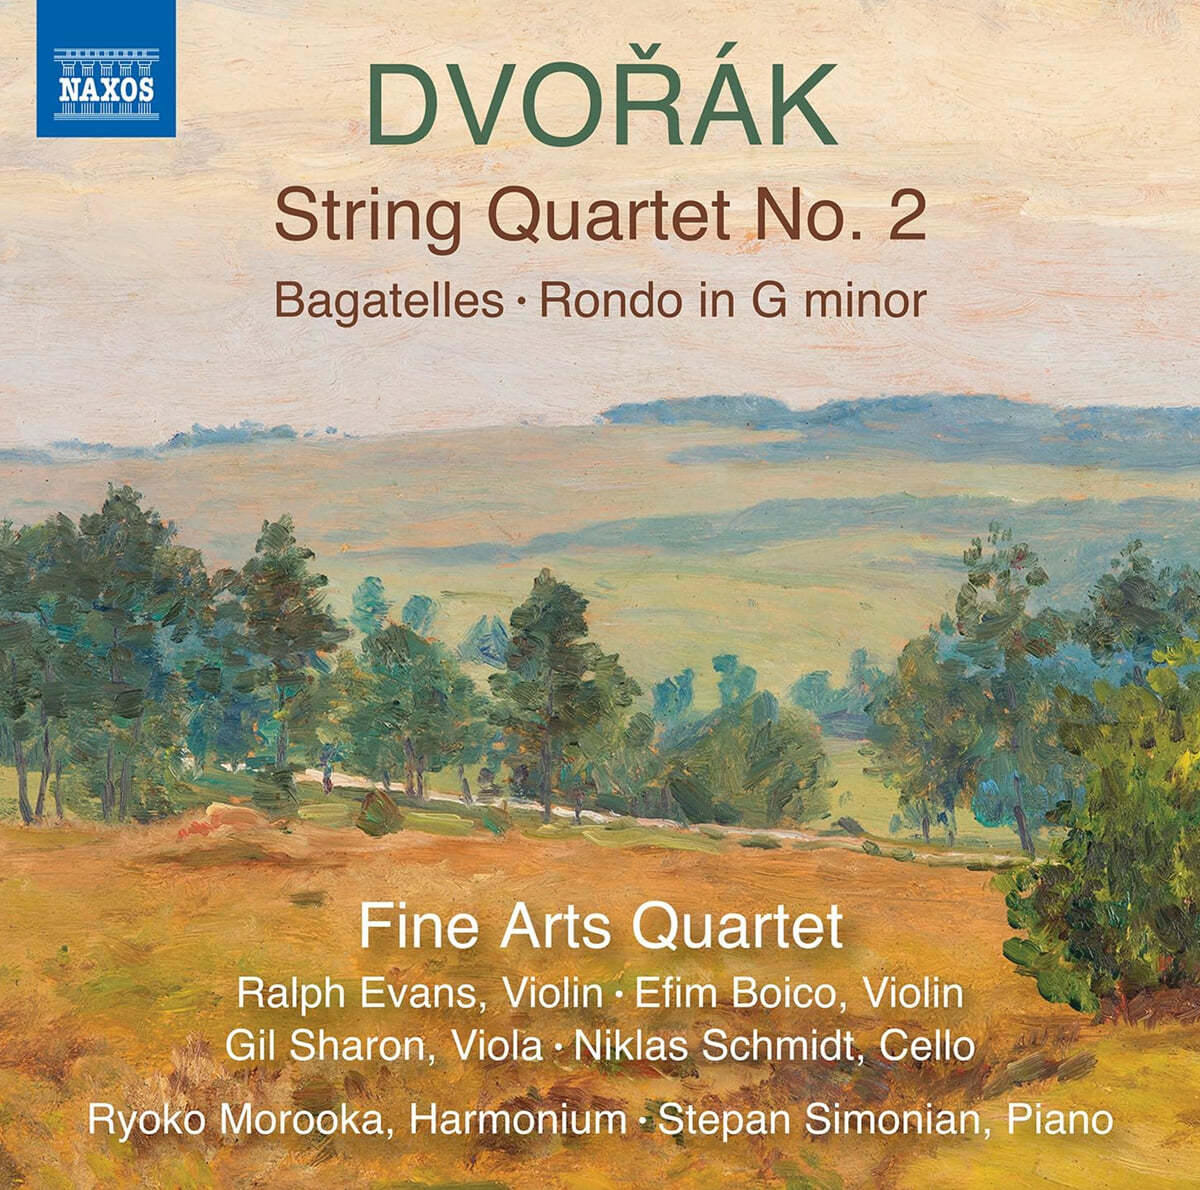 Fine Arts Quartet 드보르작: 바카텔, 현악사중주 2번, 론도 g단조 (Dvorak: String Quartet No. 2, Bagatelles & Rondo, B. 171)